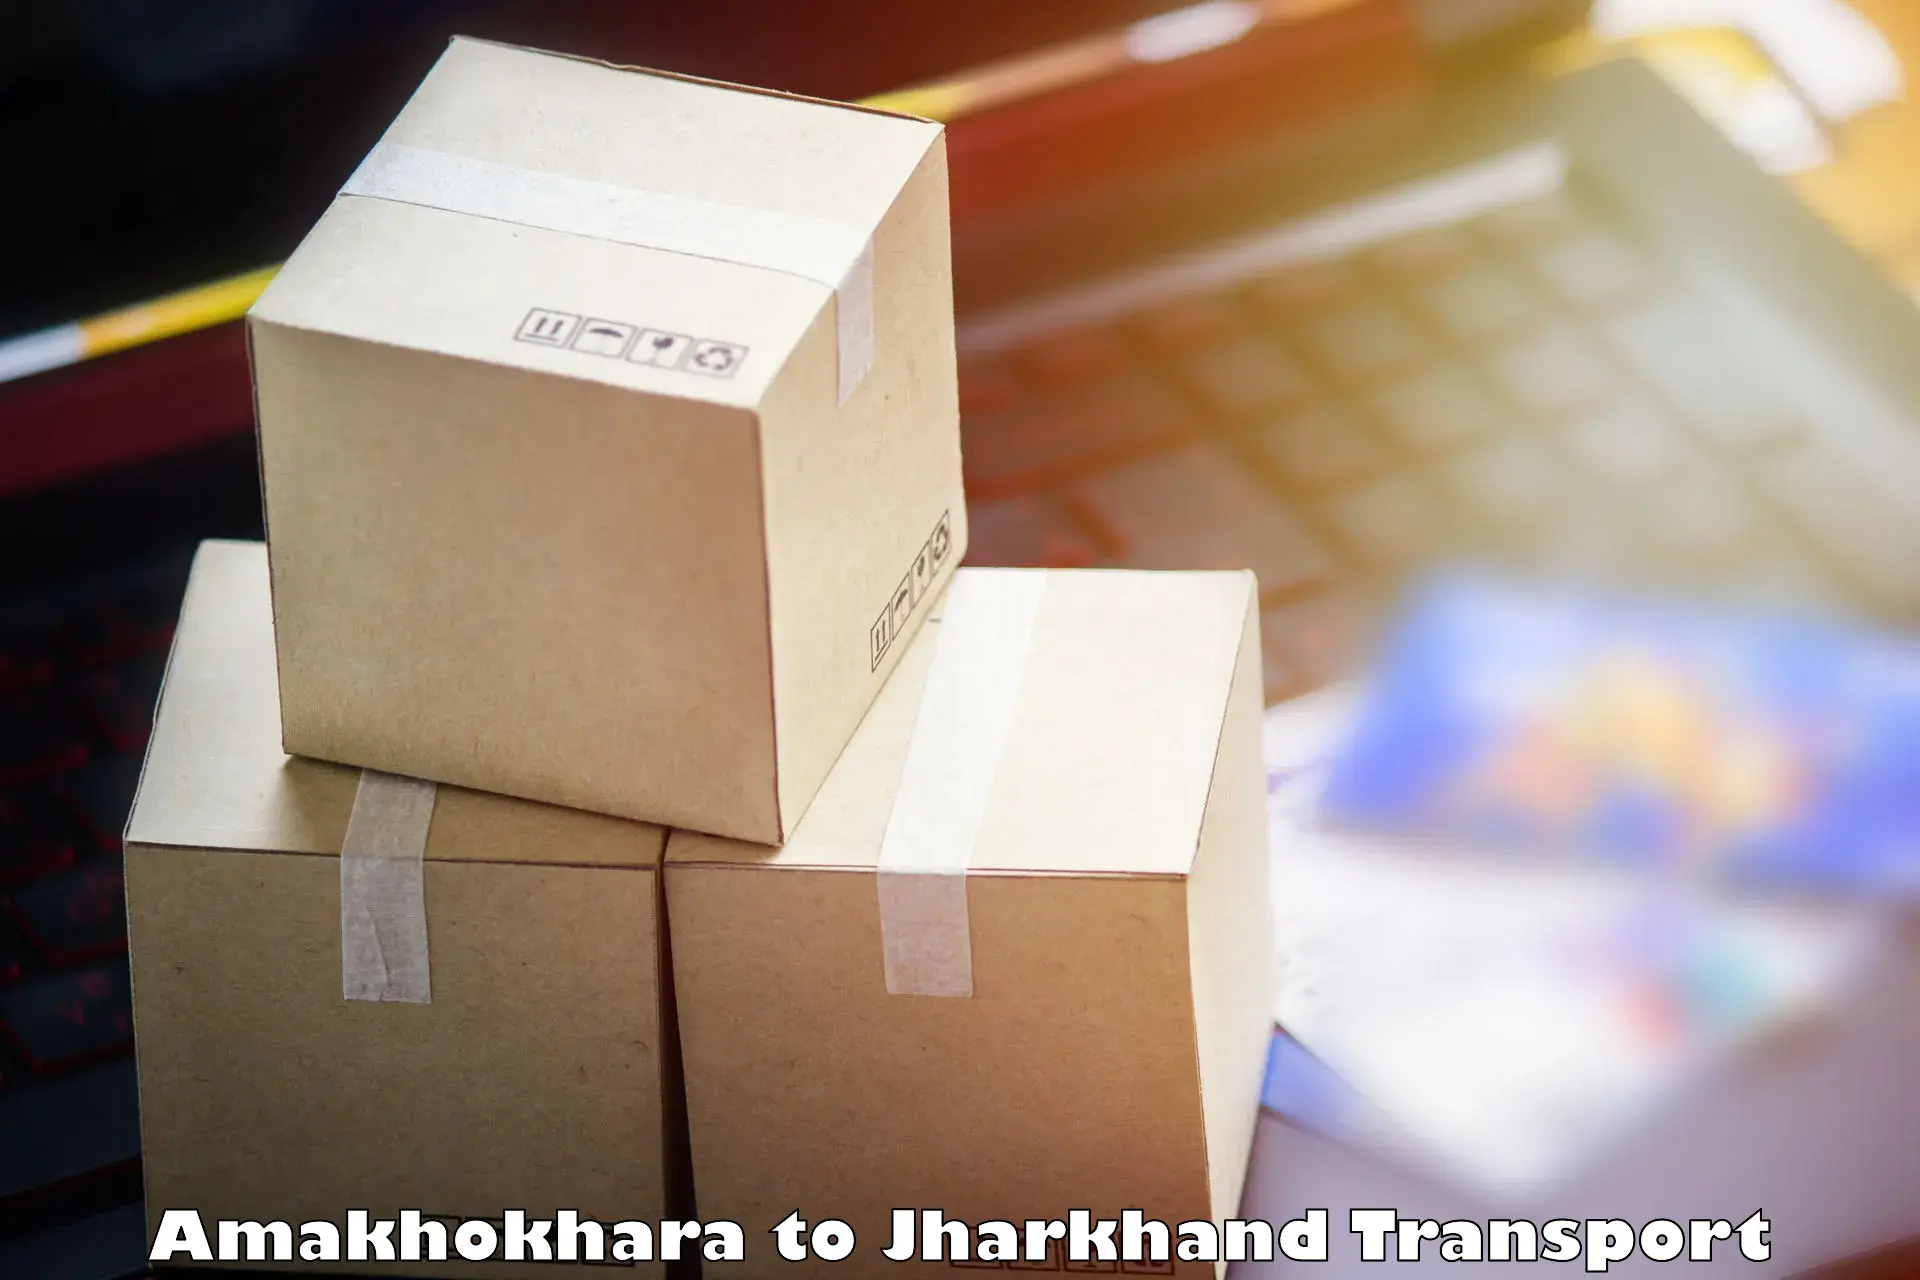 Truck transport companies in India Amakhokhara to Seraikela Kharsawan